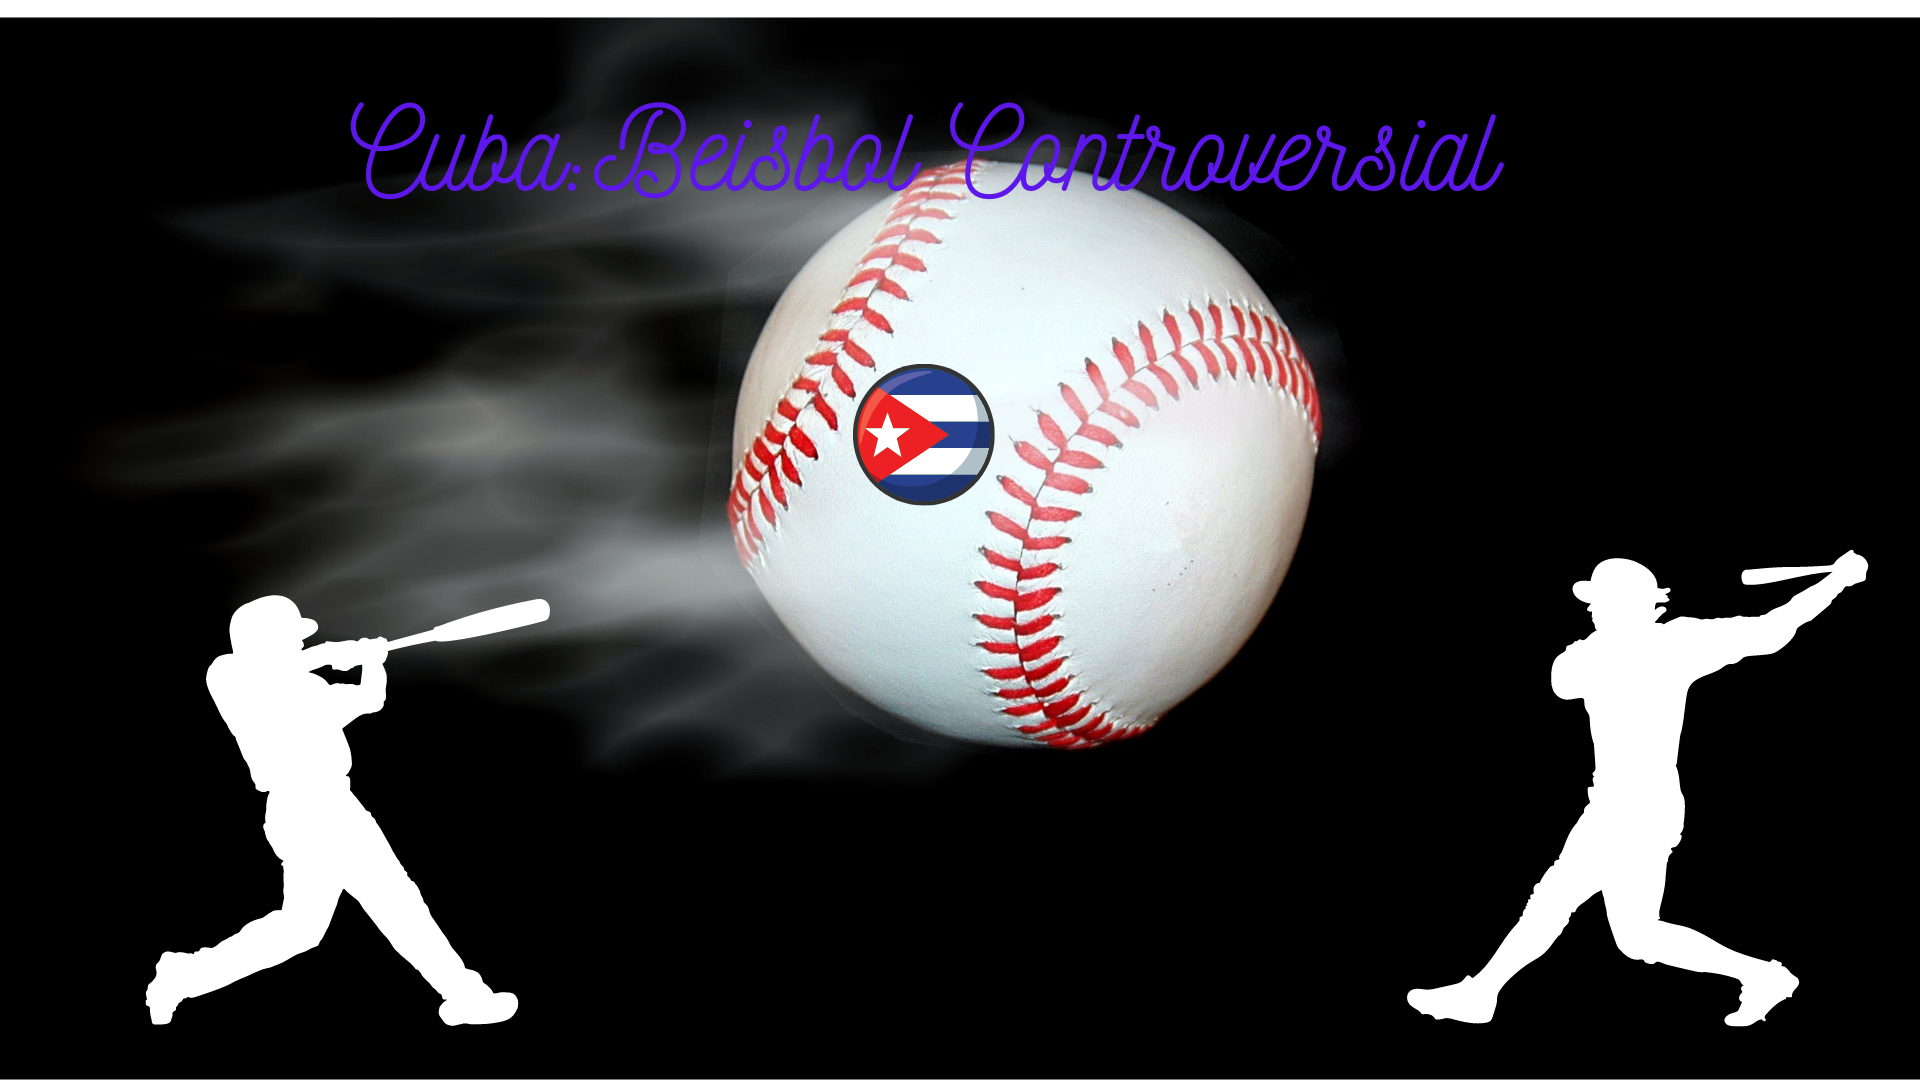 Cuba Beisbol Controversial.png